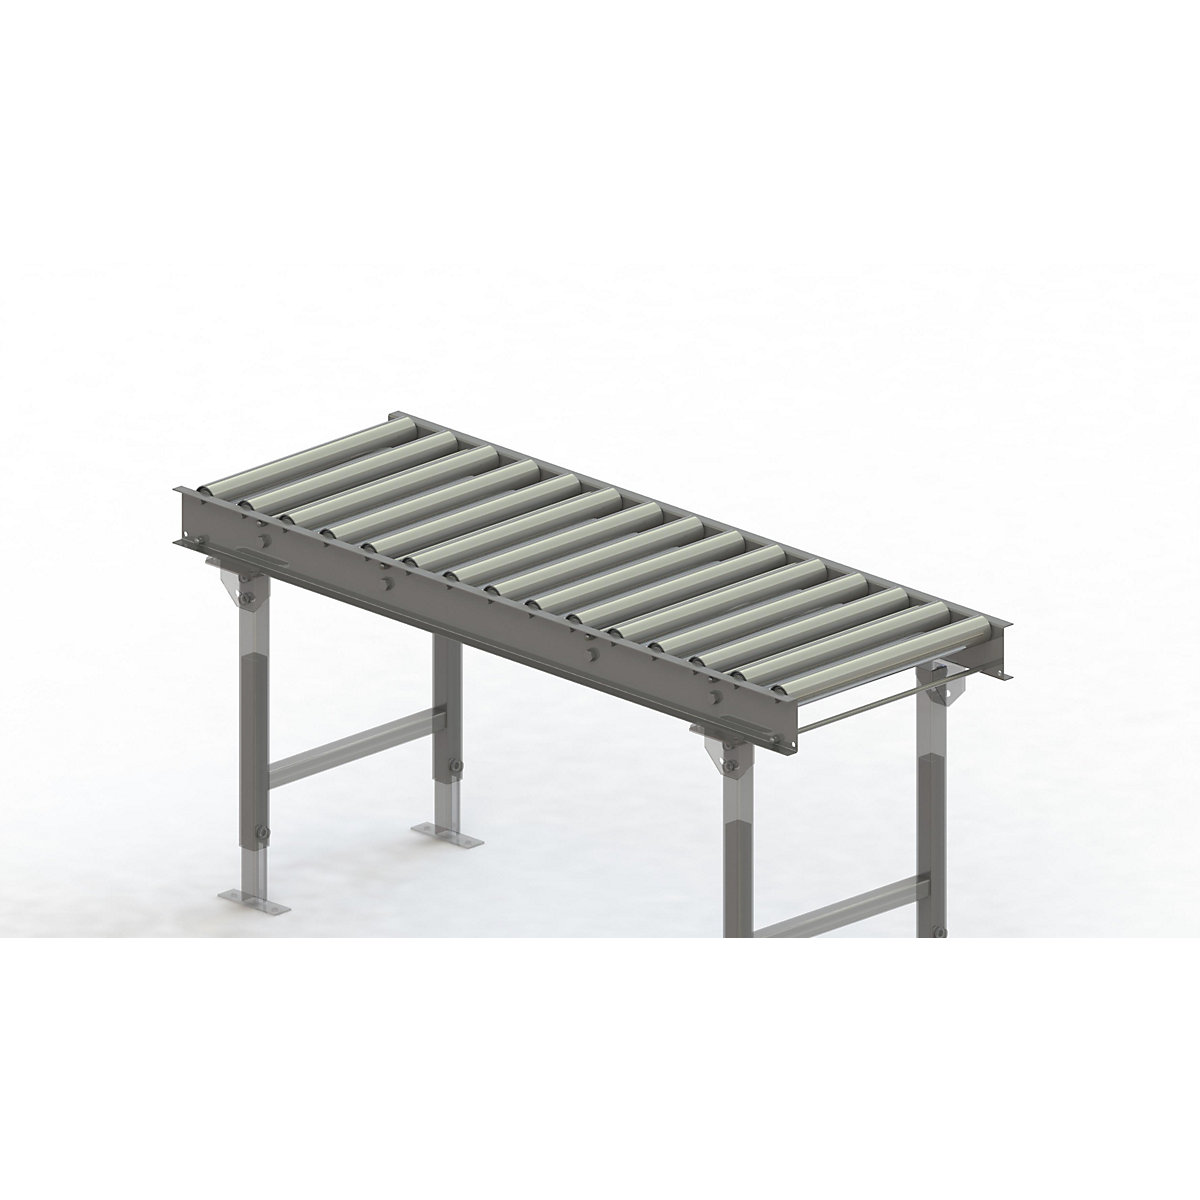 Gura – Roller conveyor, steel frame with zinc plated steel rollers, track width 500 mm, distance between axles 100 mm, length 1.5 m